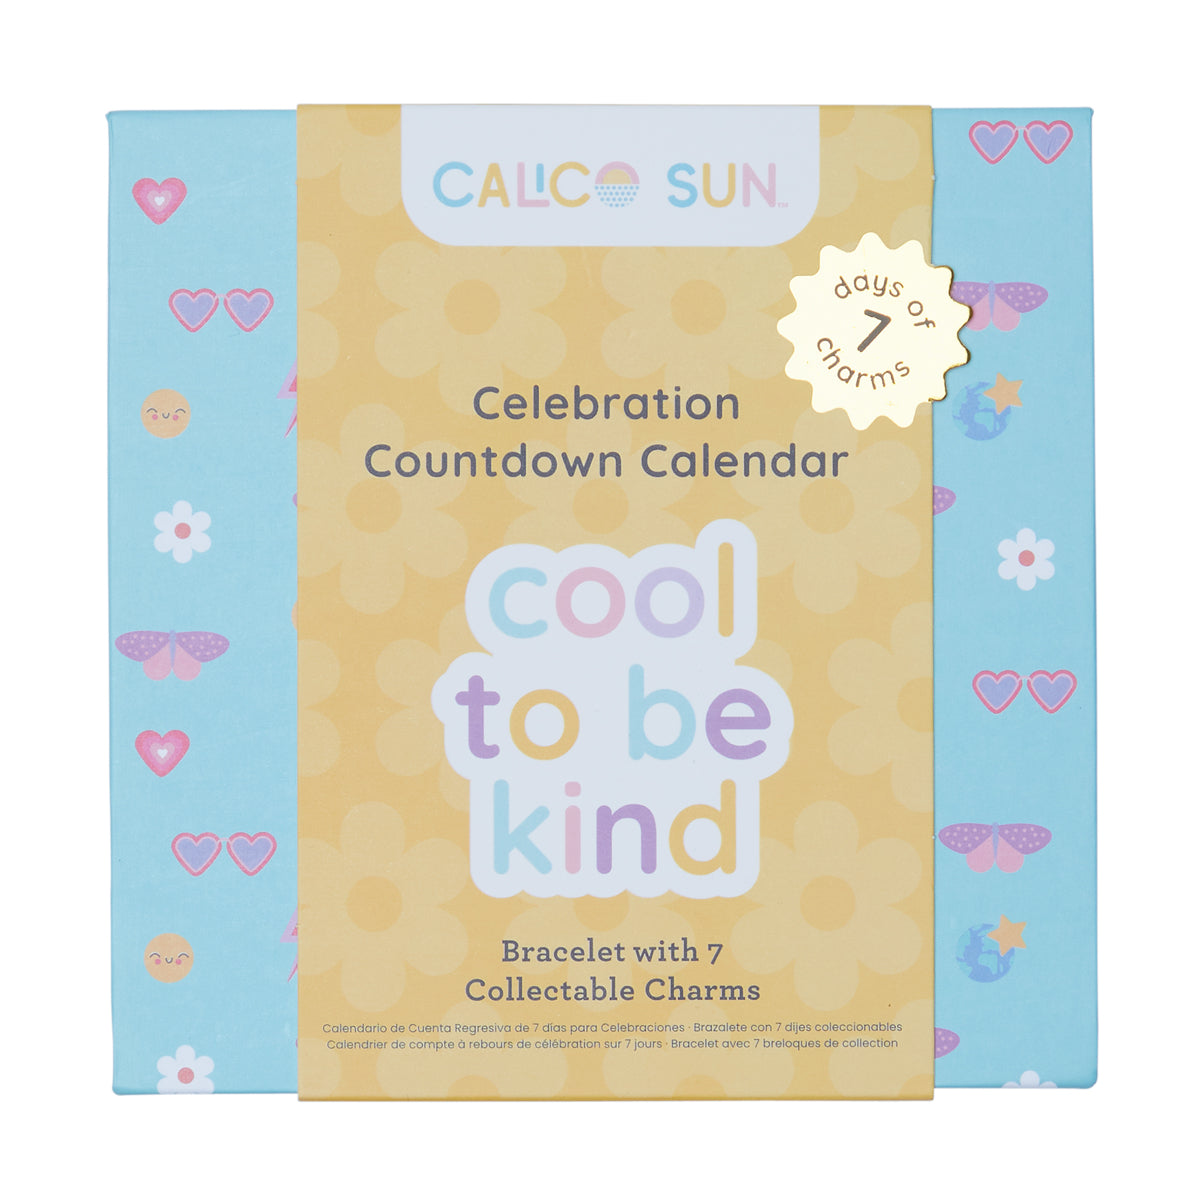 Calico Sun Calico Sun Countdown Celebration Kalender - Cool, freundlich zu sein